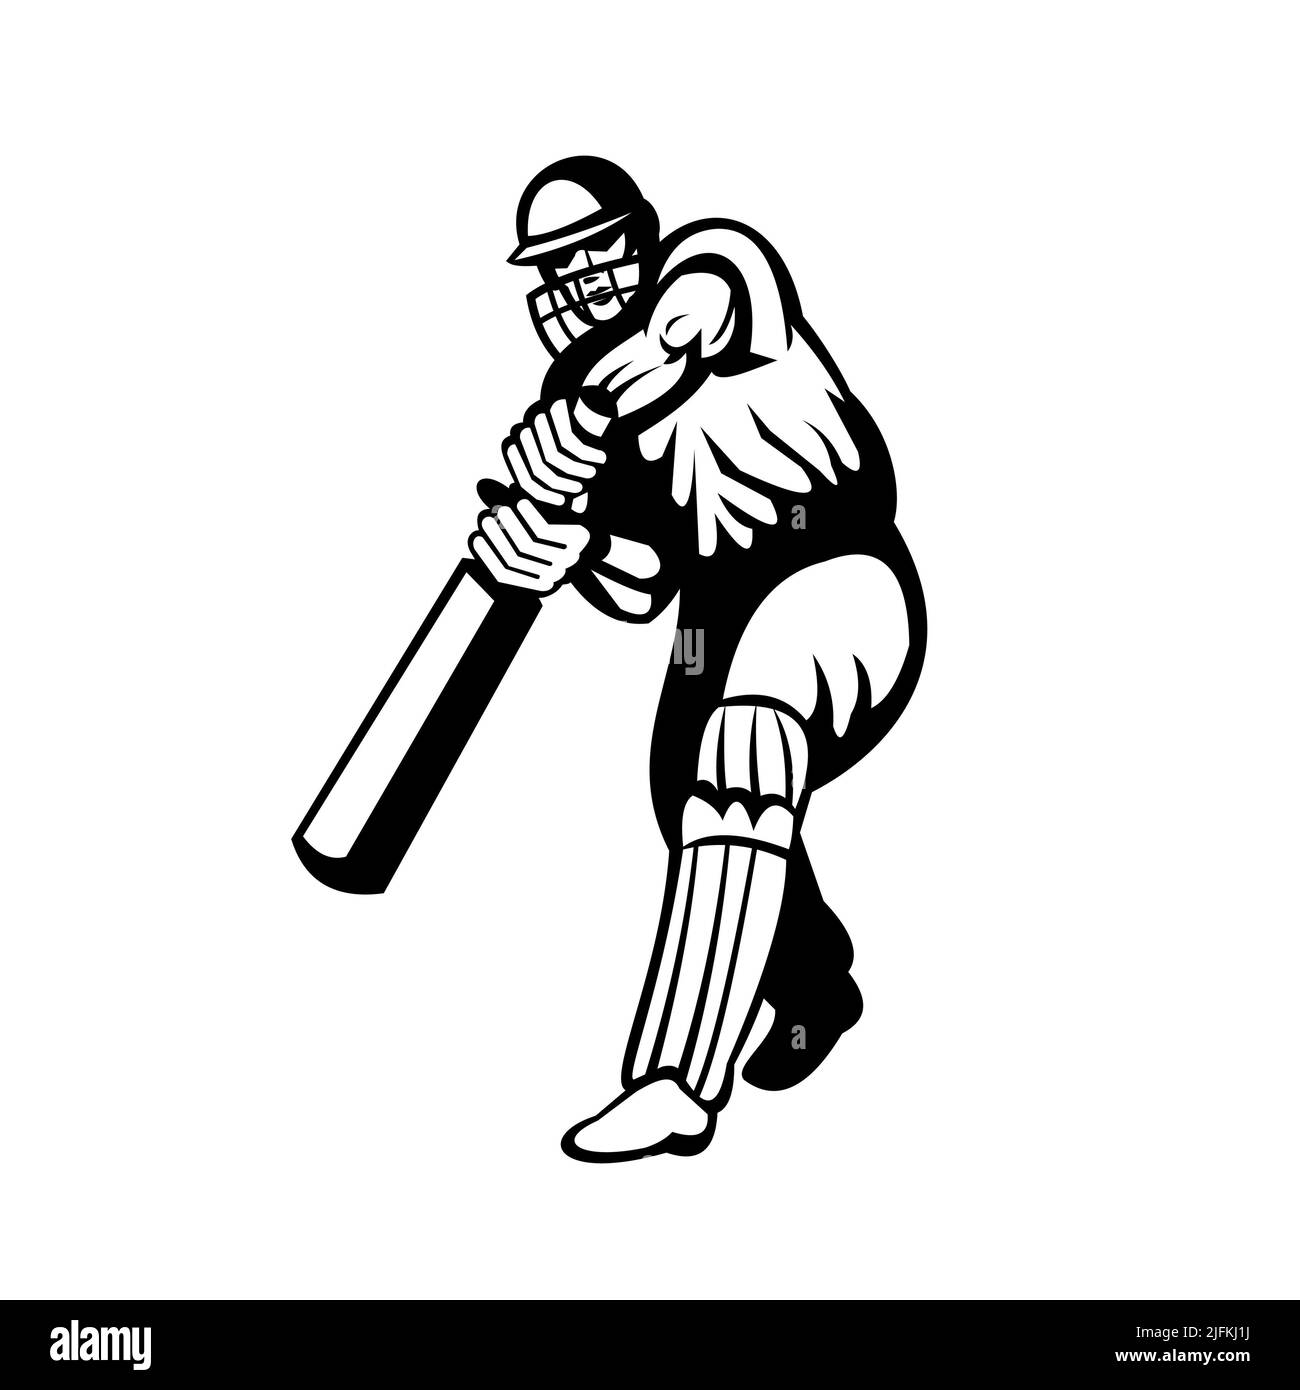 How to draw a cricket bat and ball - YouTube-saigonsouth.com.vn